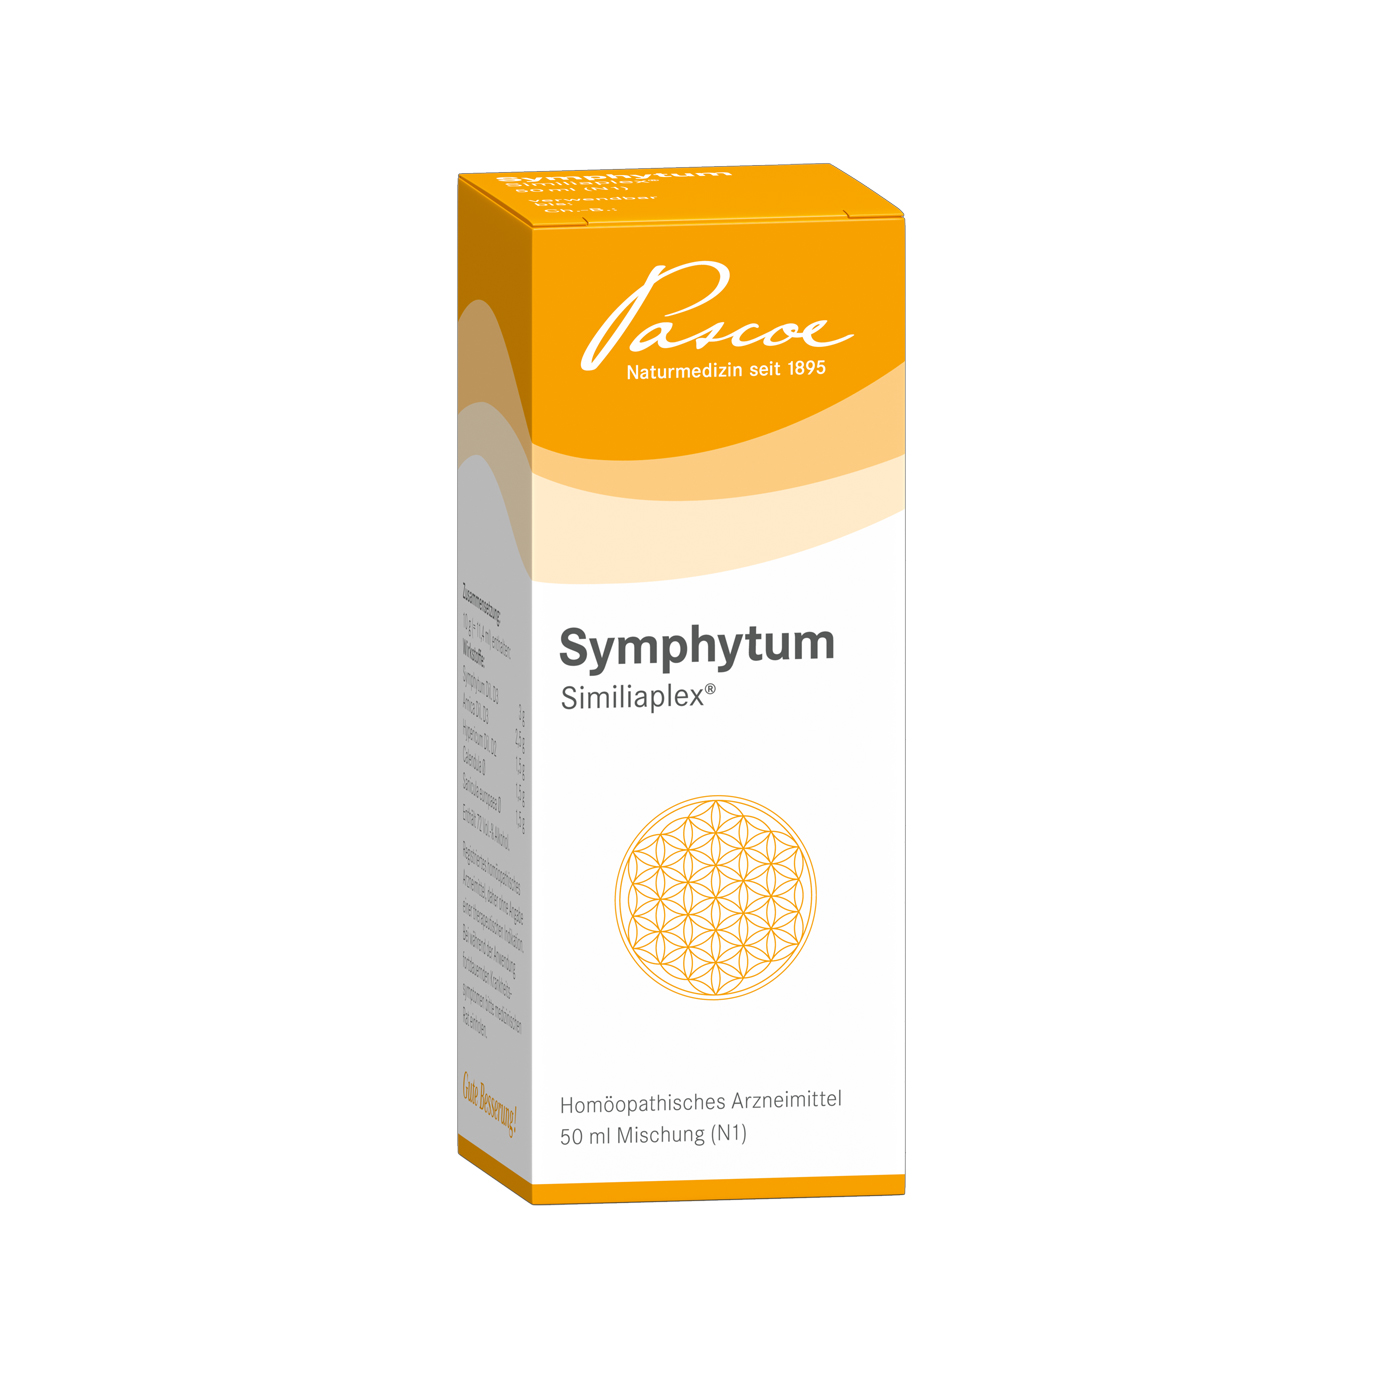 Symphytum Similiaplex 50 ml Packshot PZN 01355679